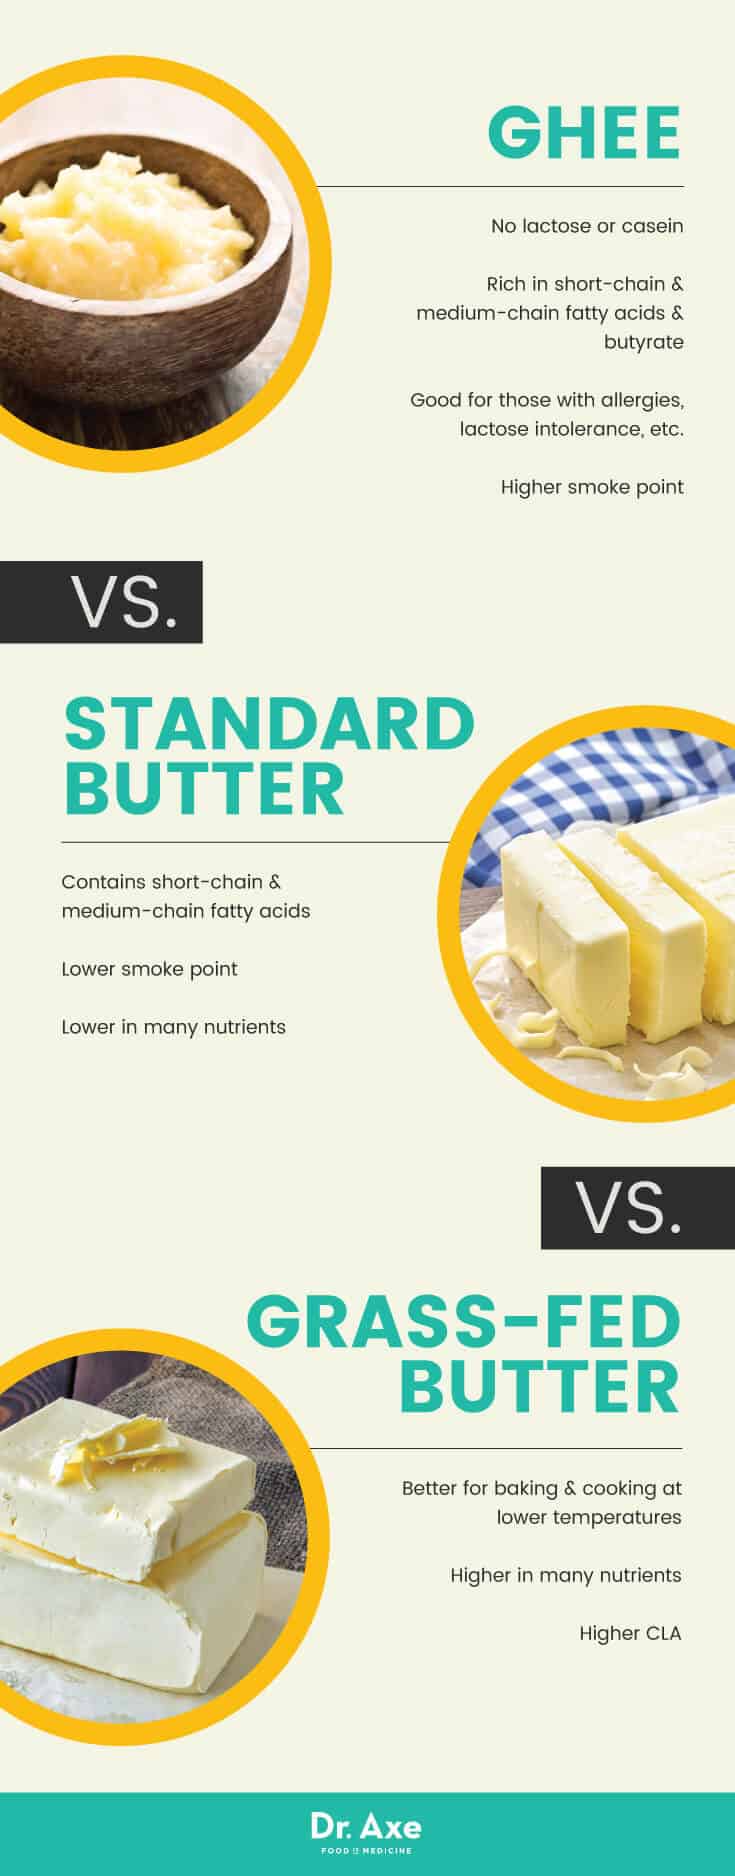 Grass-fed butter vs. ghee vs. standard butter - Dr. Axe